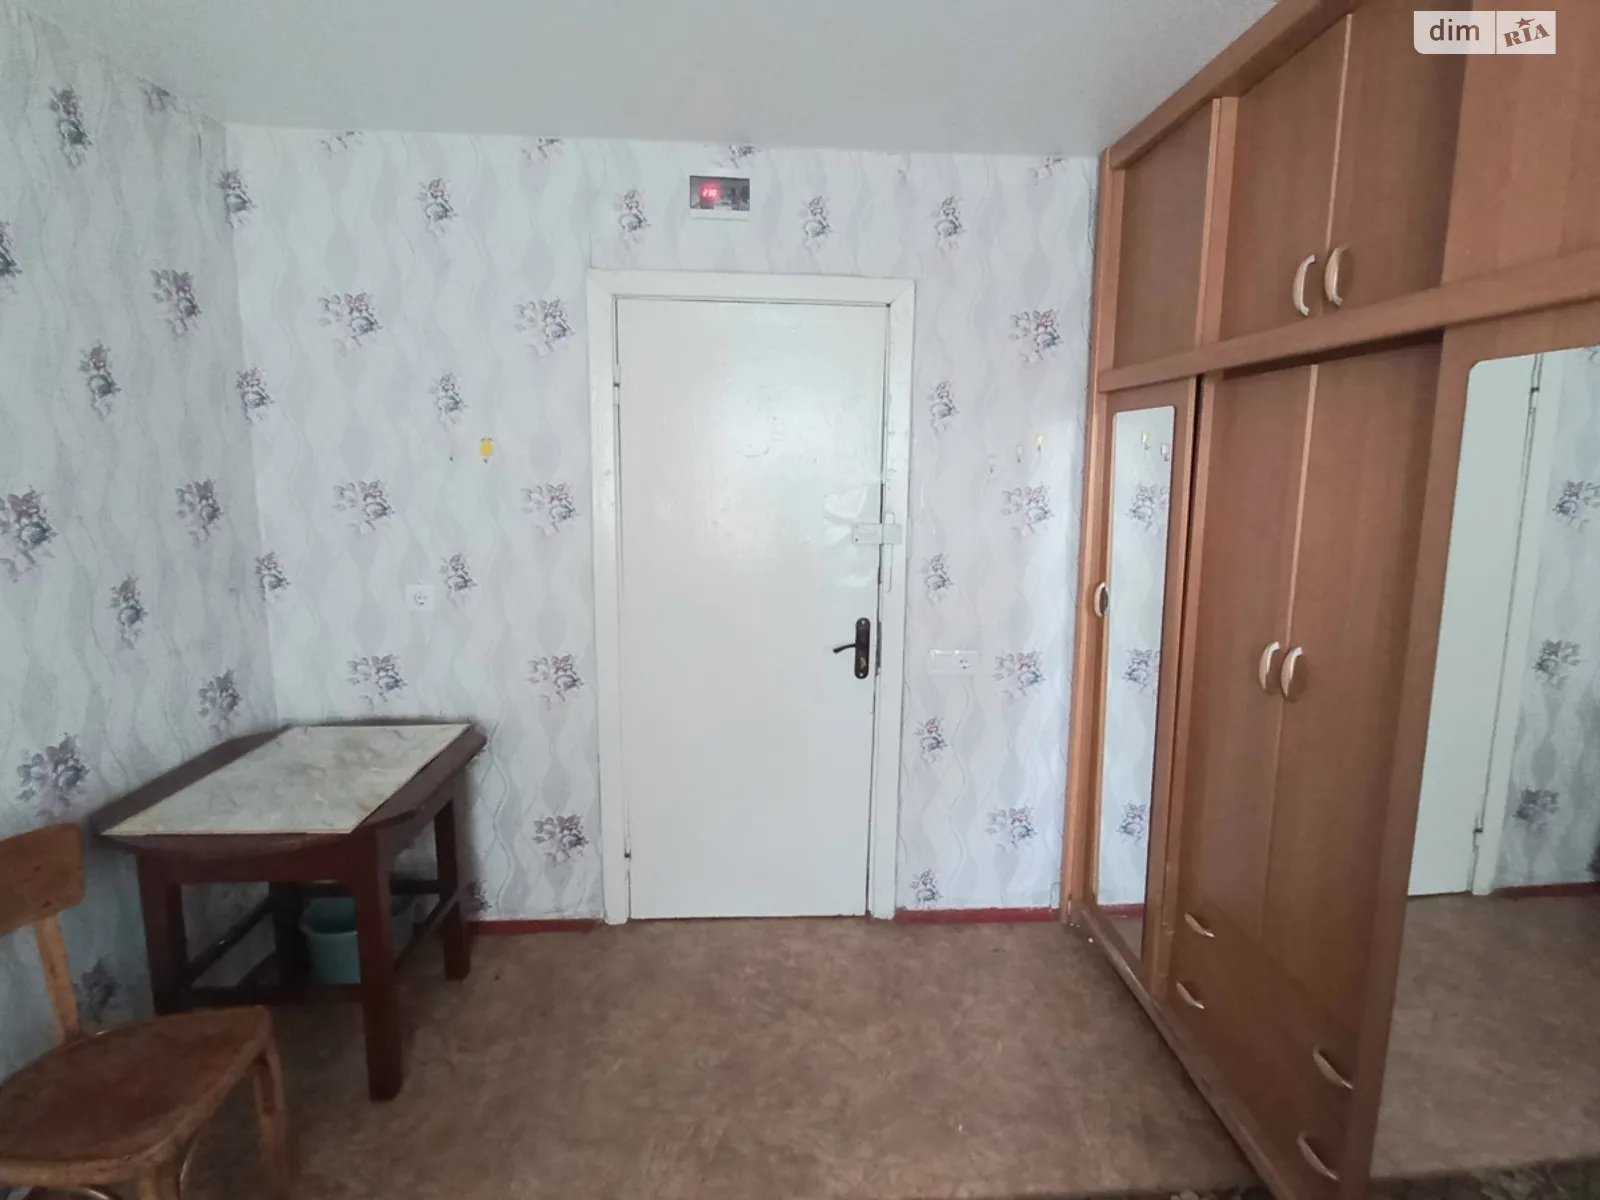 Сдается в аренду комната 21 кв. м в Ровно - фото 3